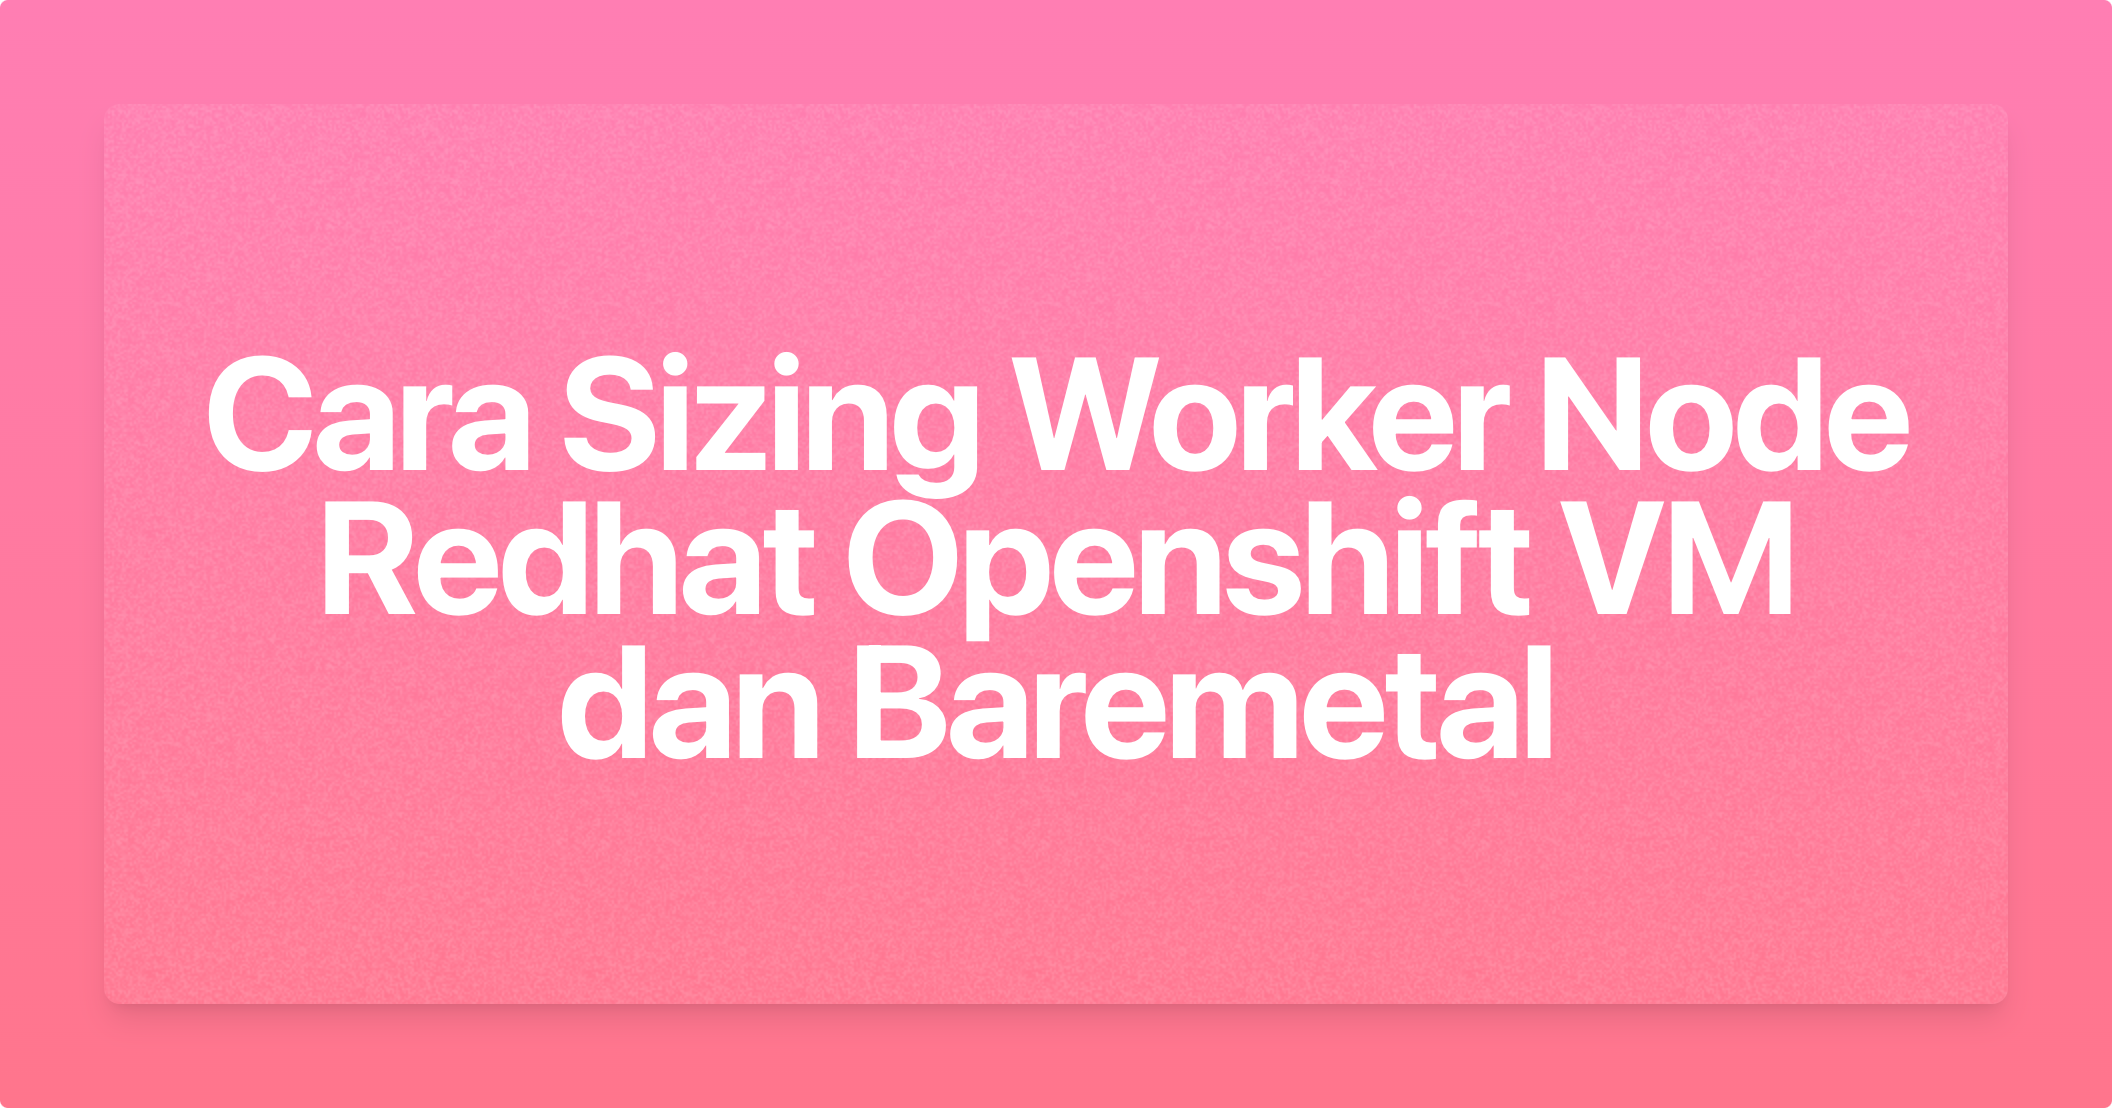 Cara Sizing Worker Node Redhat Openshift VM dan Baremetal
